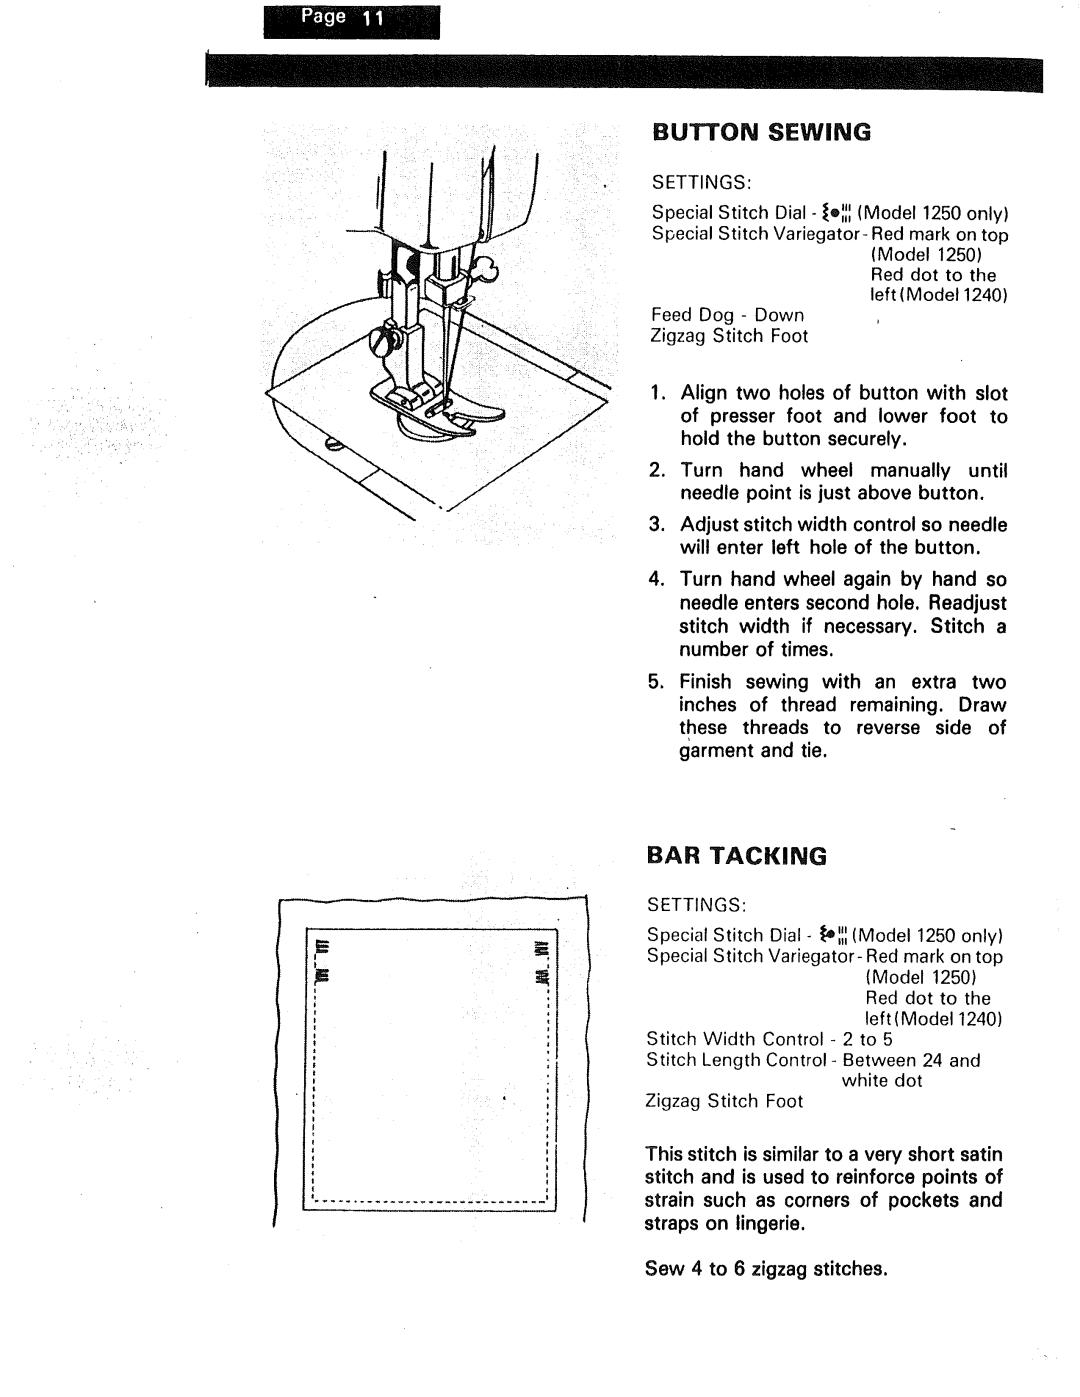 Kenmore 1250, 1230, 1240 manual iiii,i ?ii, Button Sewing, Bar Tacking 